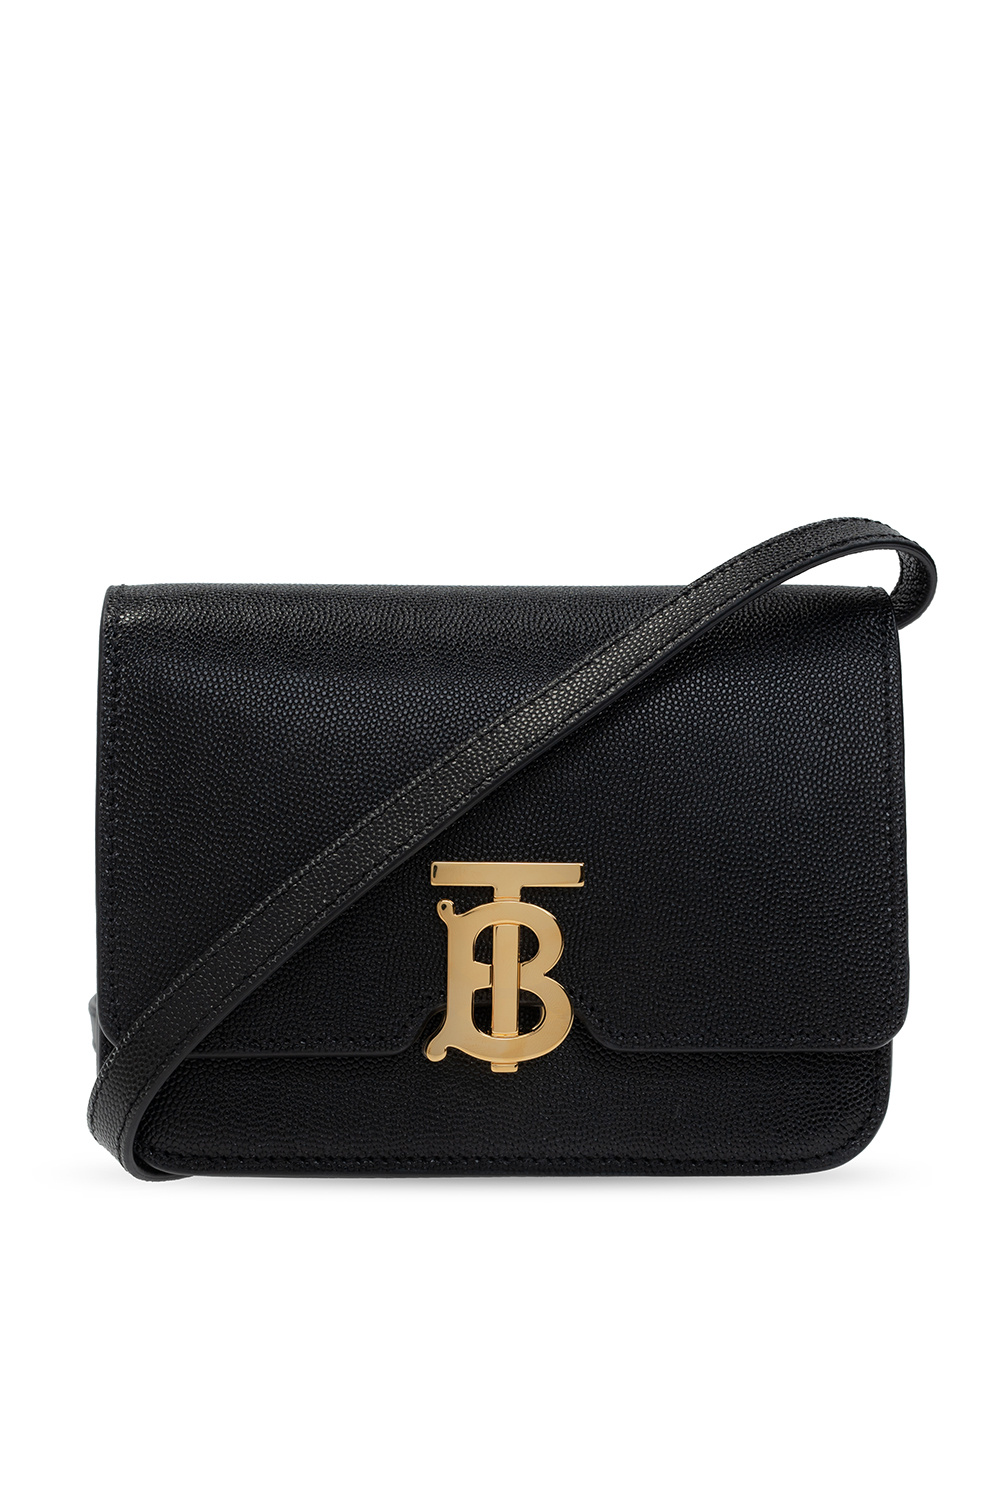 Burberry ‘TB’ shoulder bag